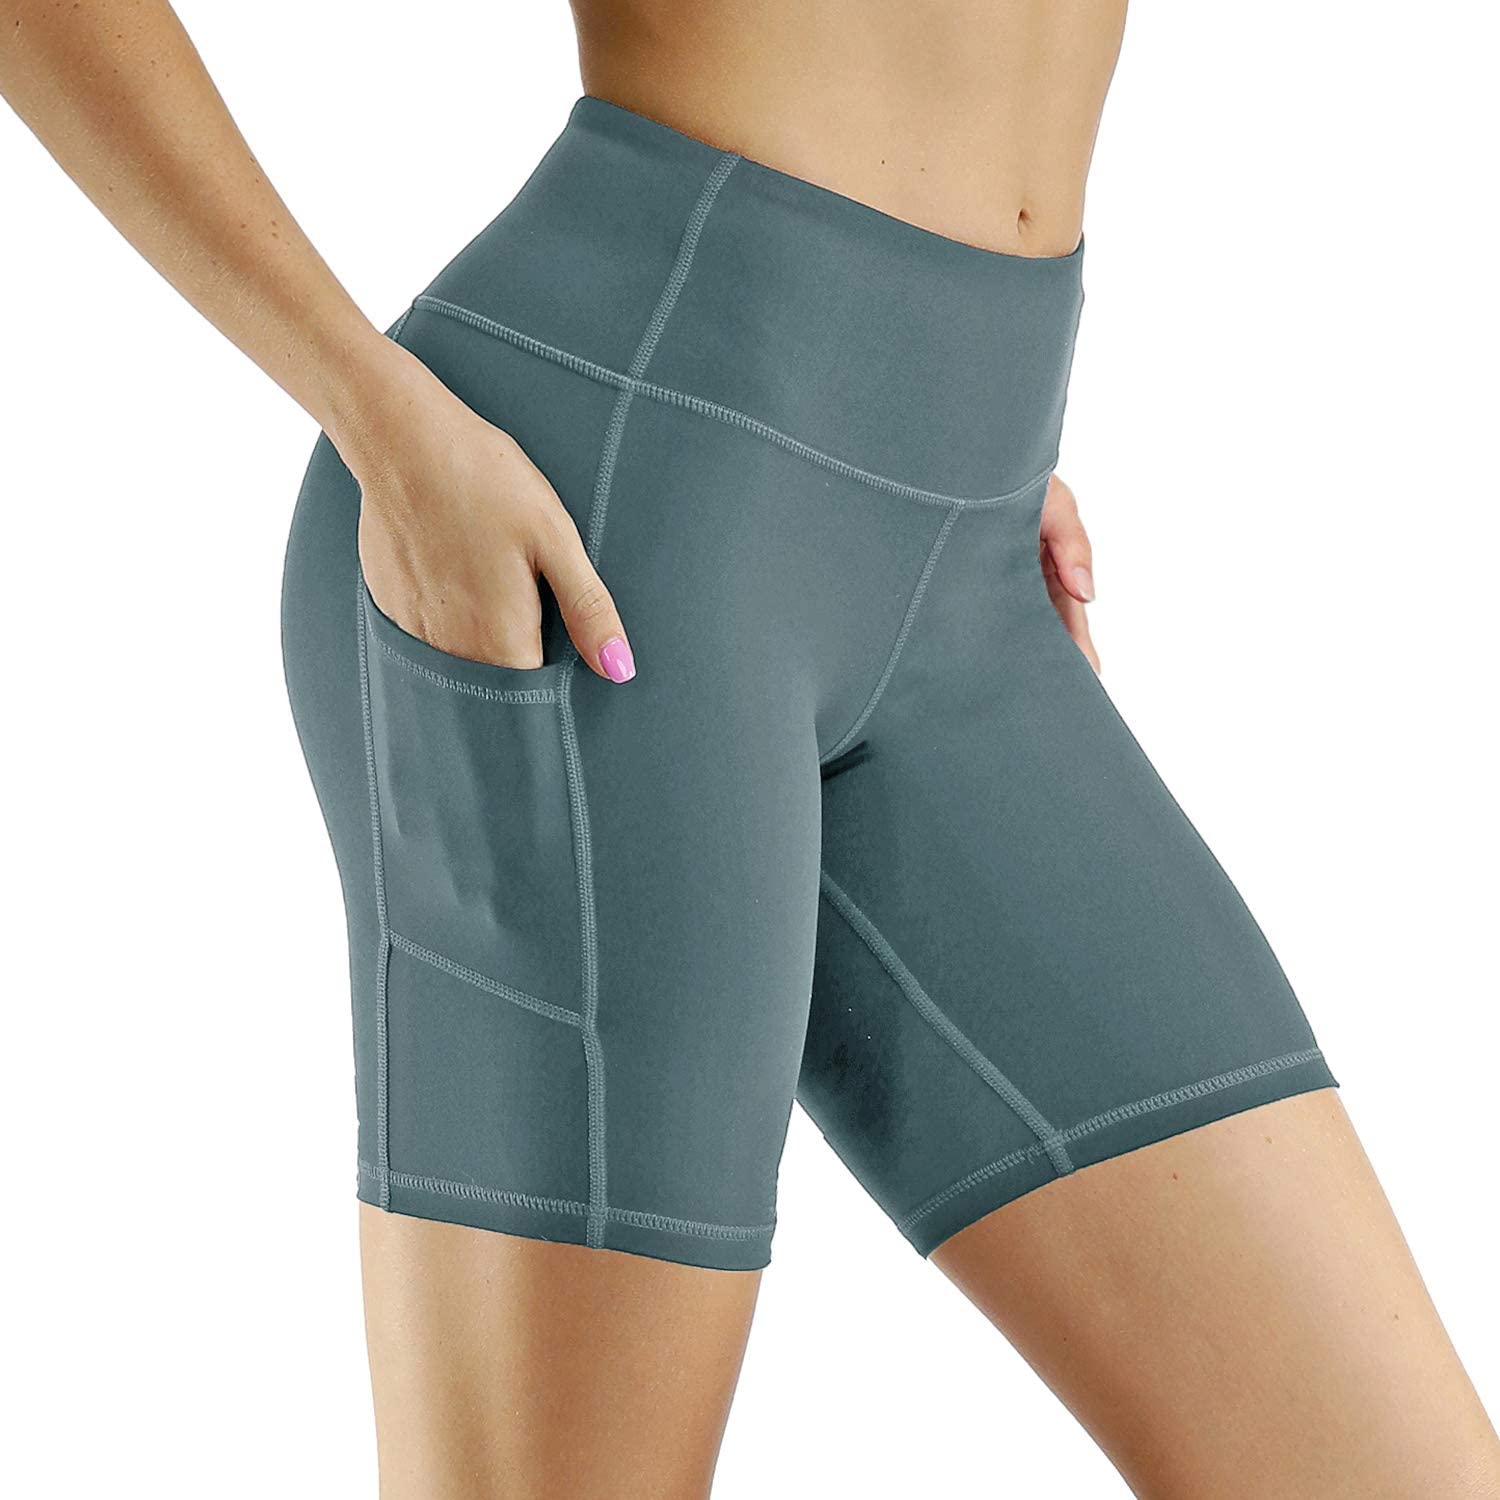 Uhnice Yoga Shorts High Waist Tummy Control 4 Way Stretch Workout Pants